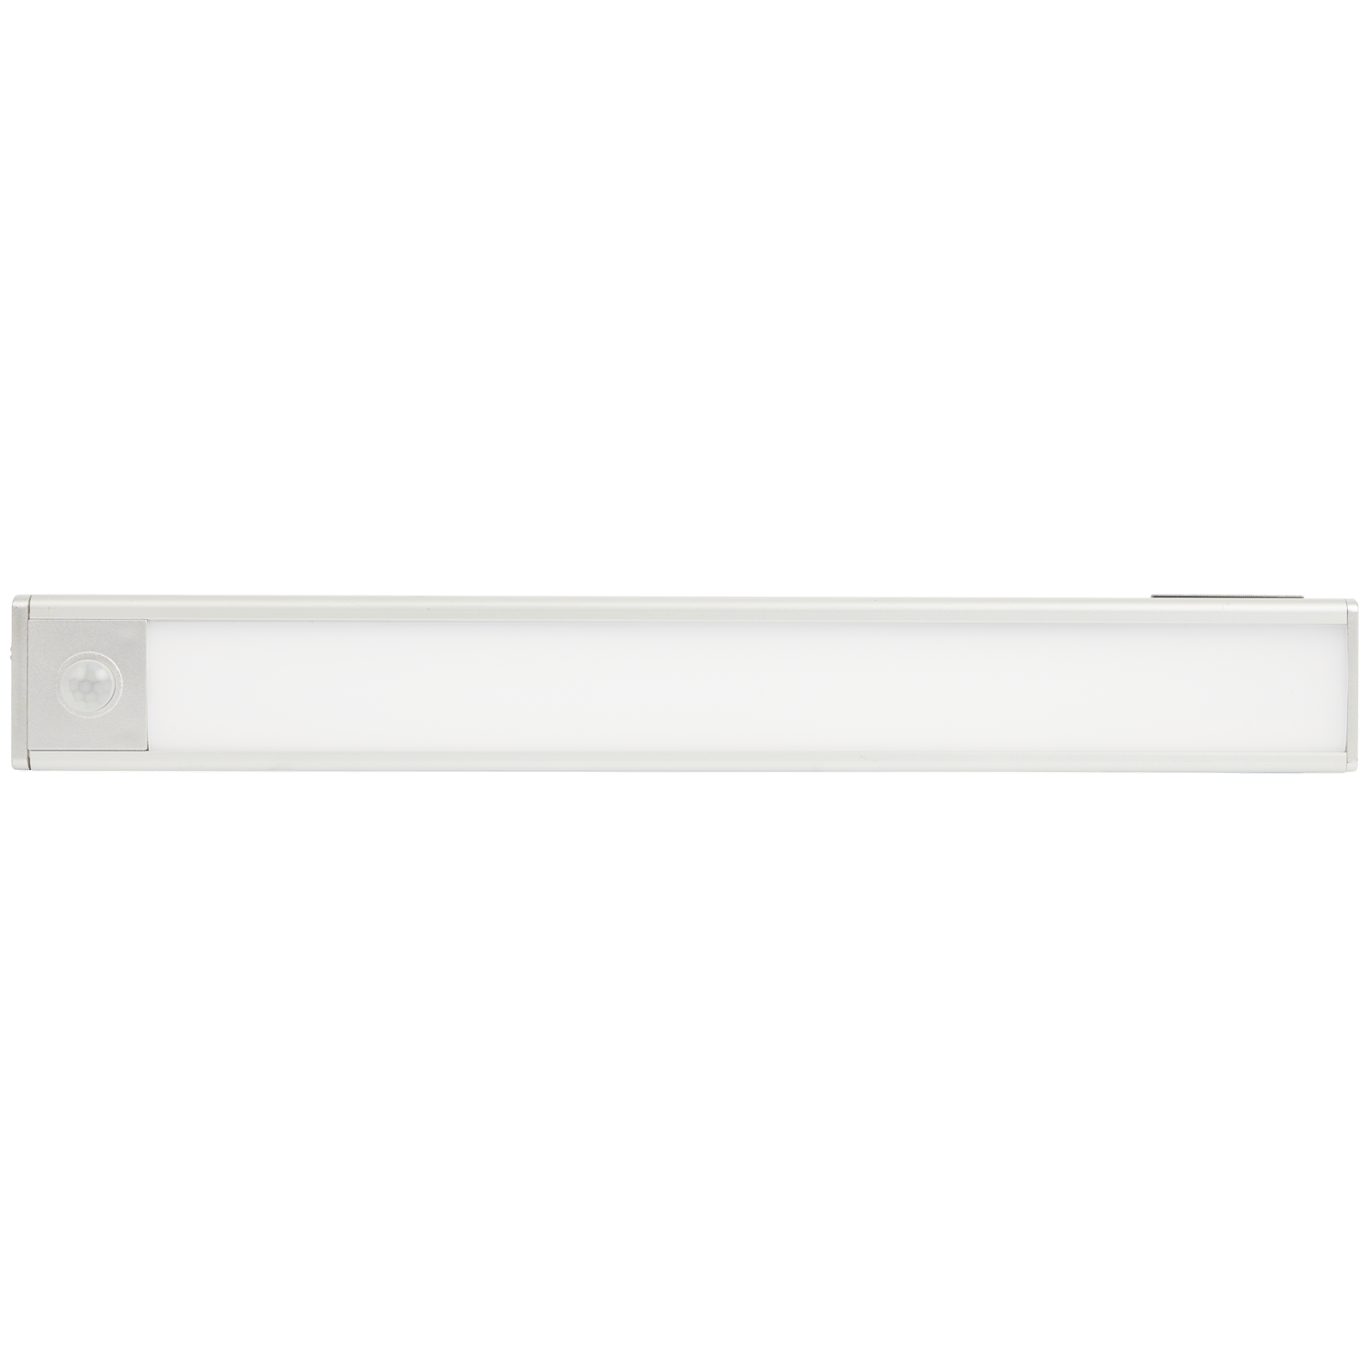 Grundig LED-Lampe mit Bewegungssensor